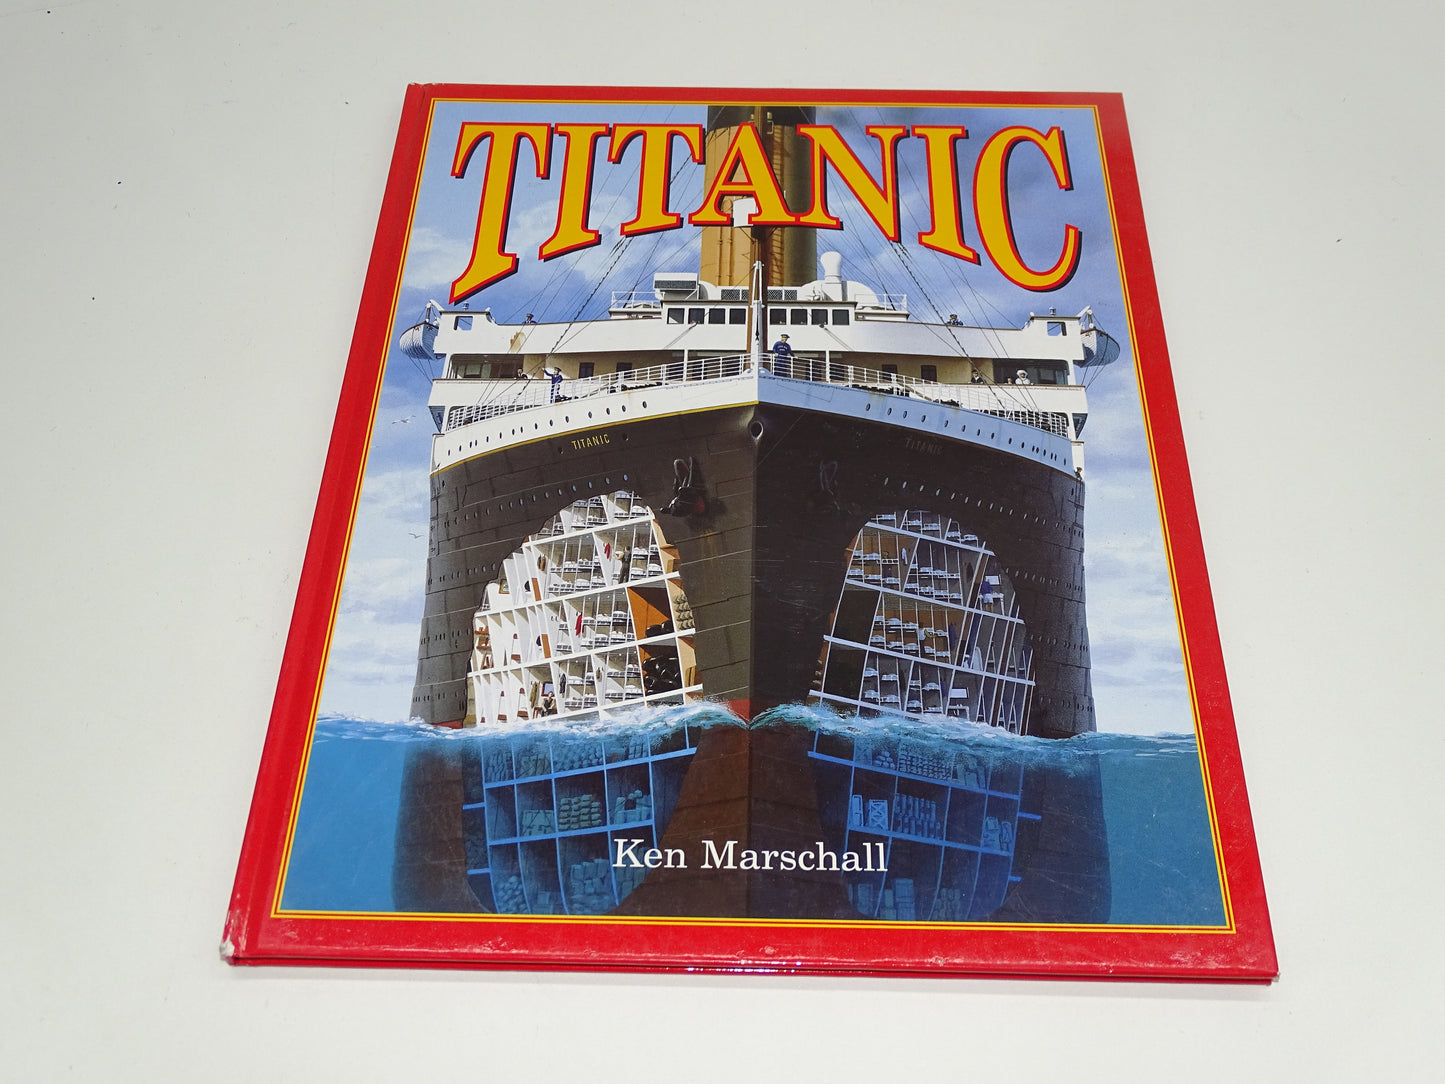 Boek: Titanic, 1998